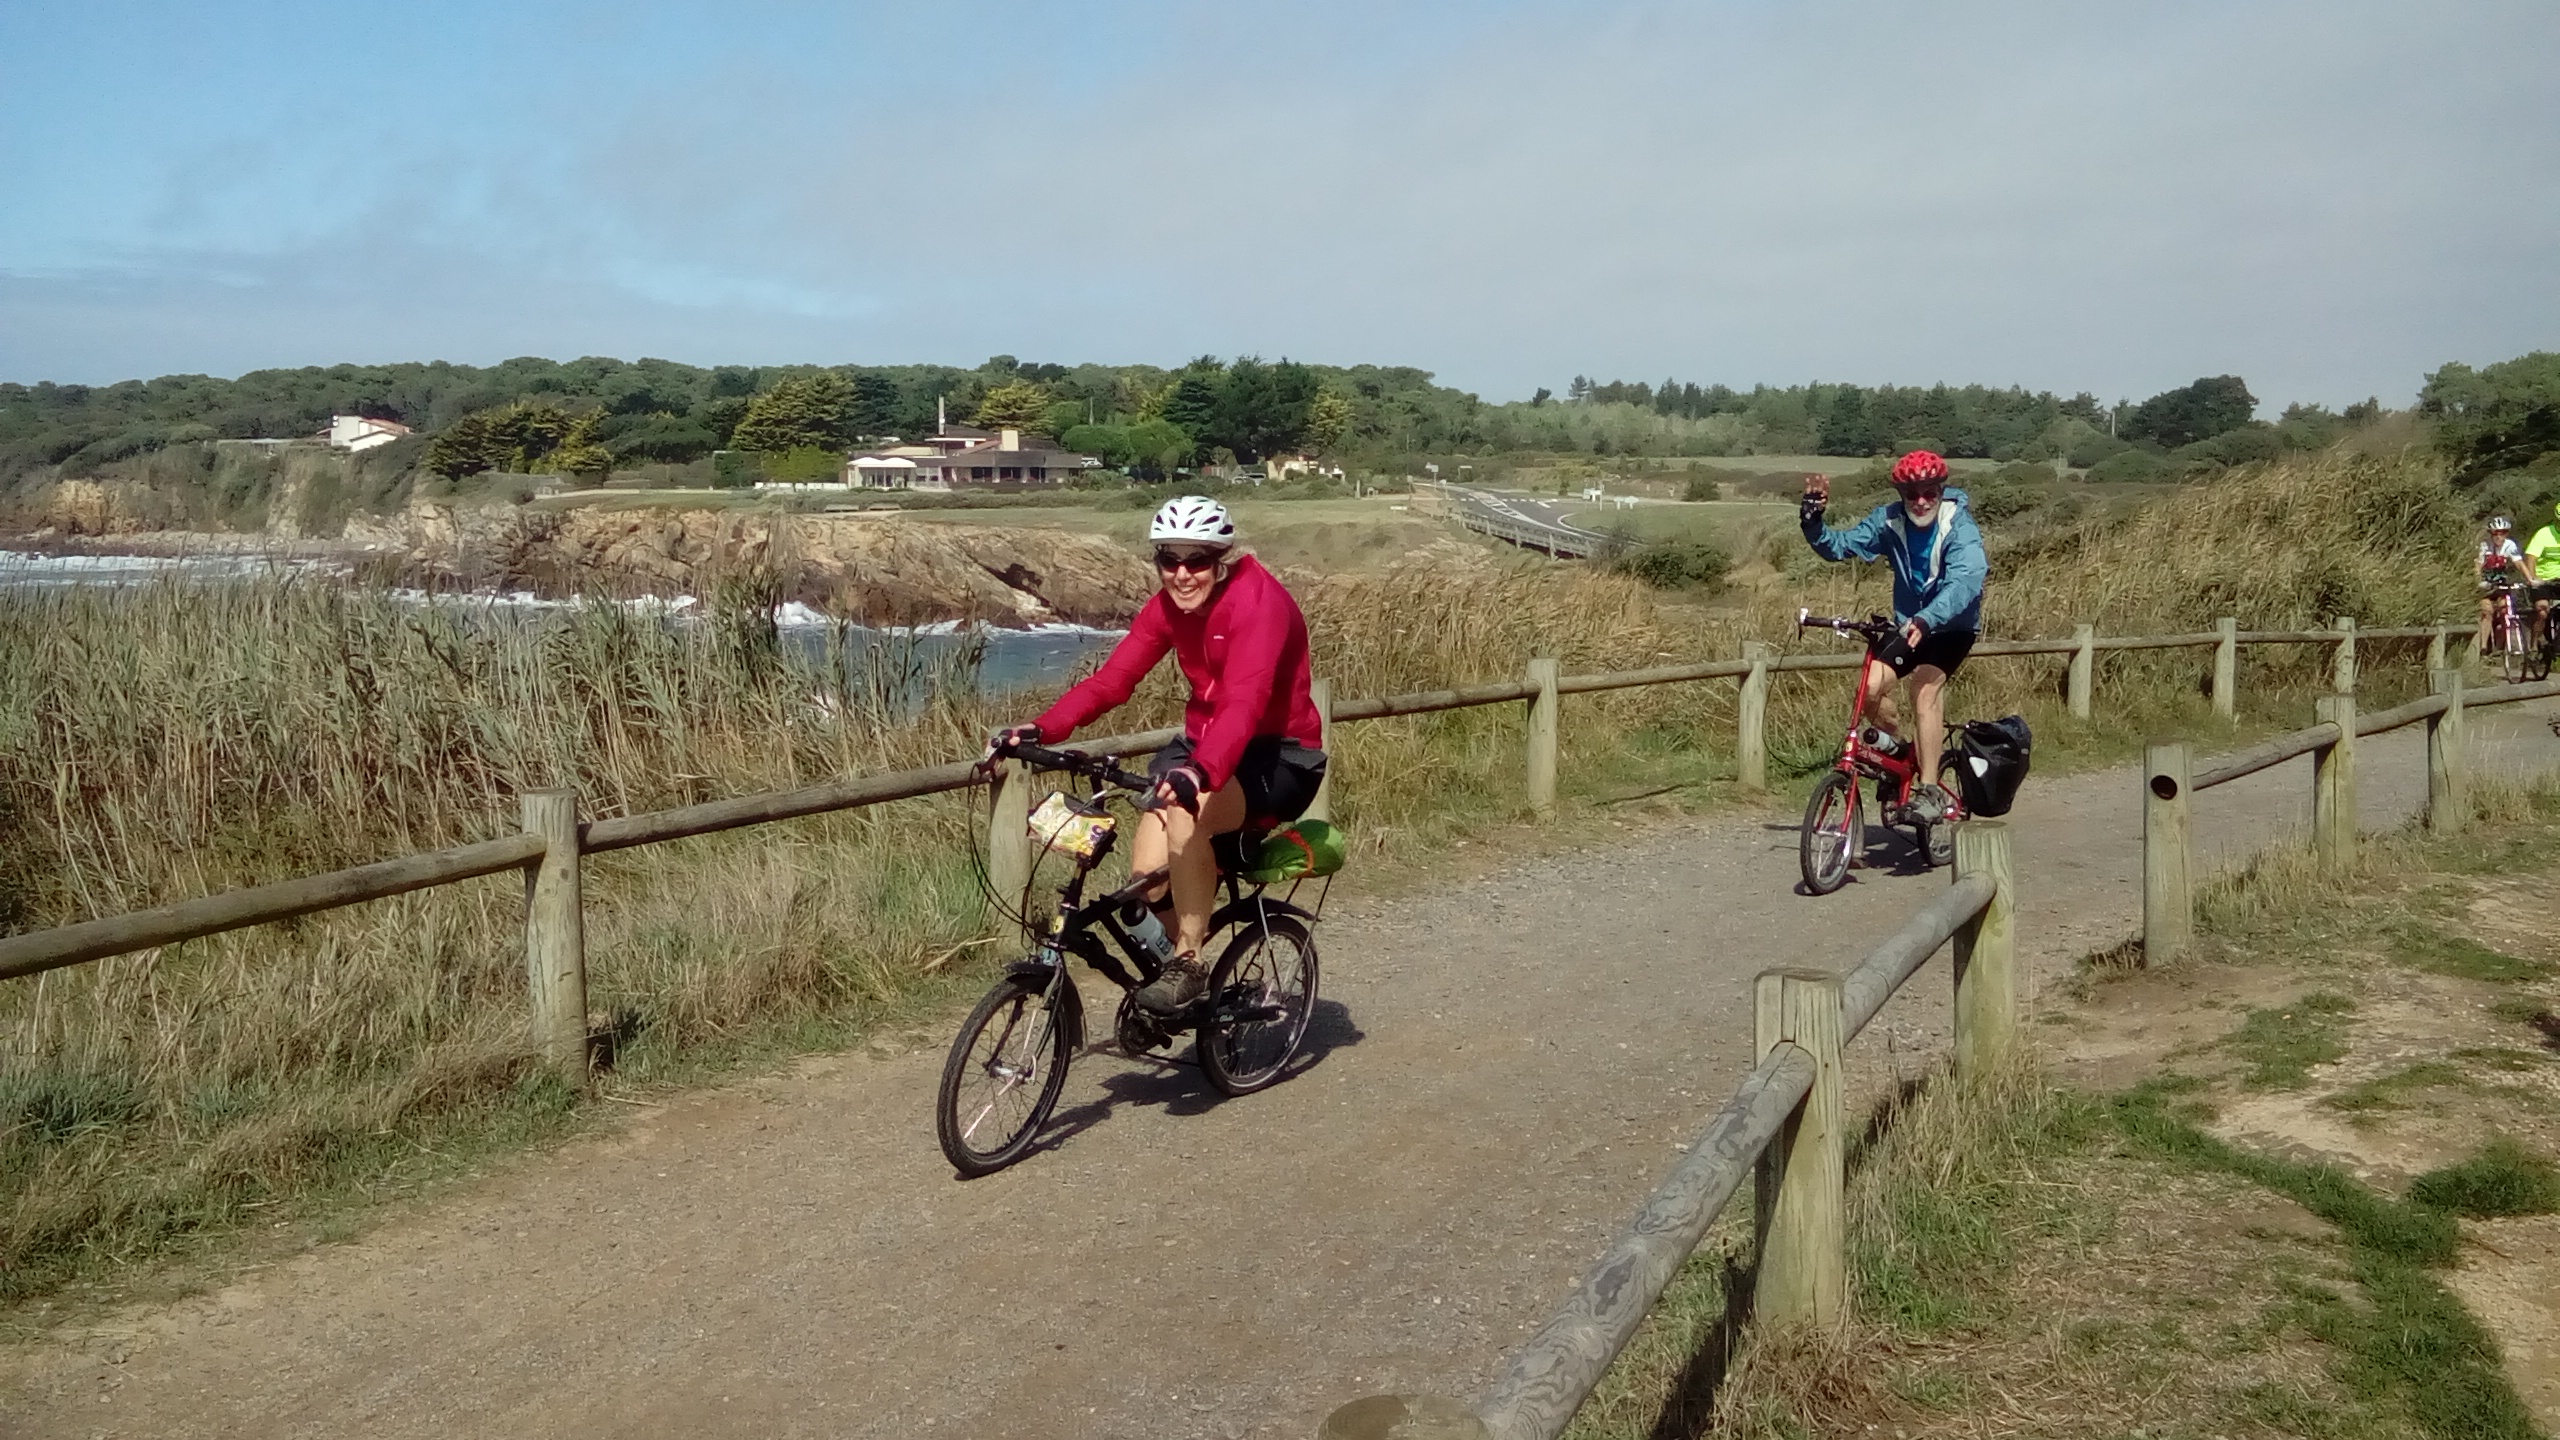 Cyclomundo riders on the Velodyssey